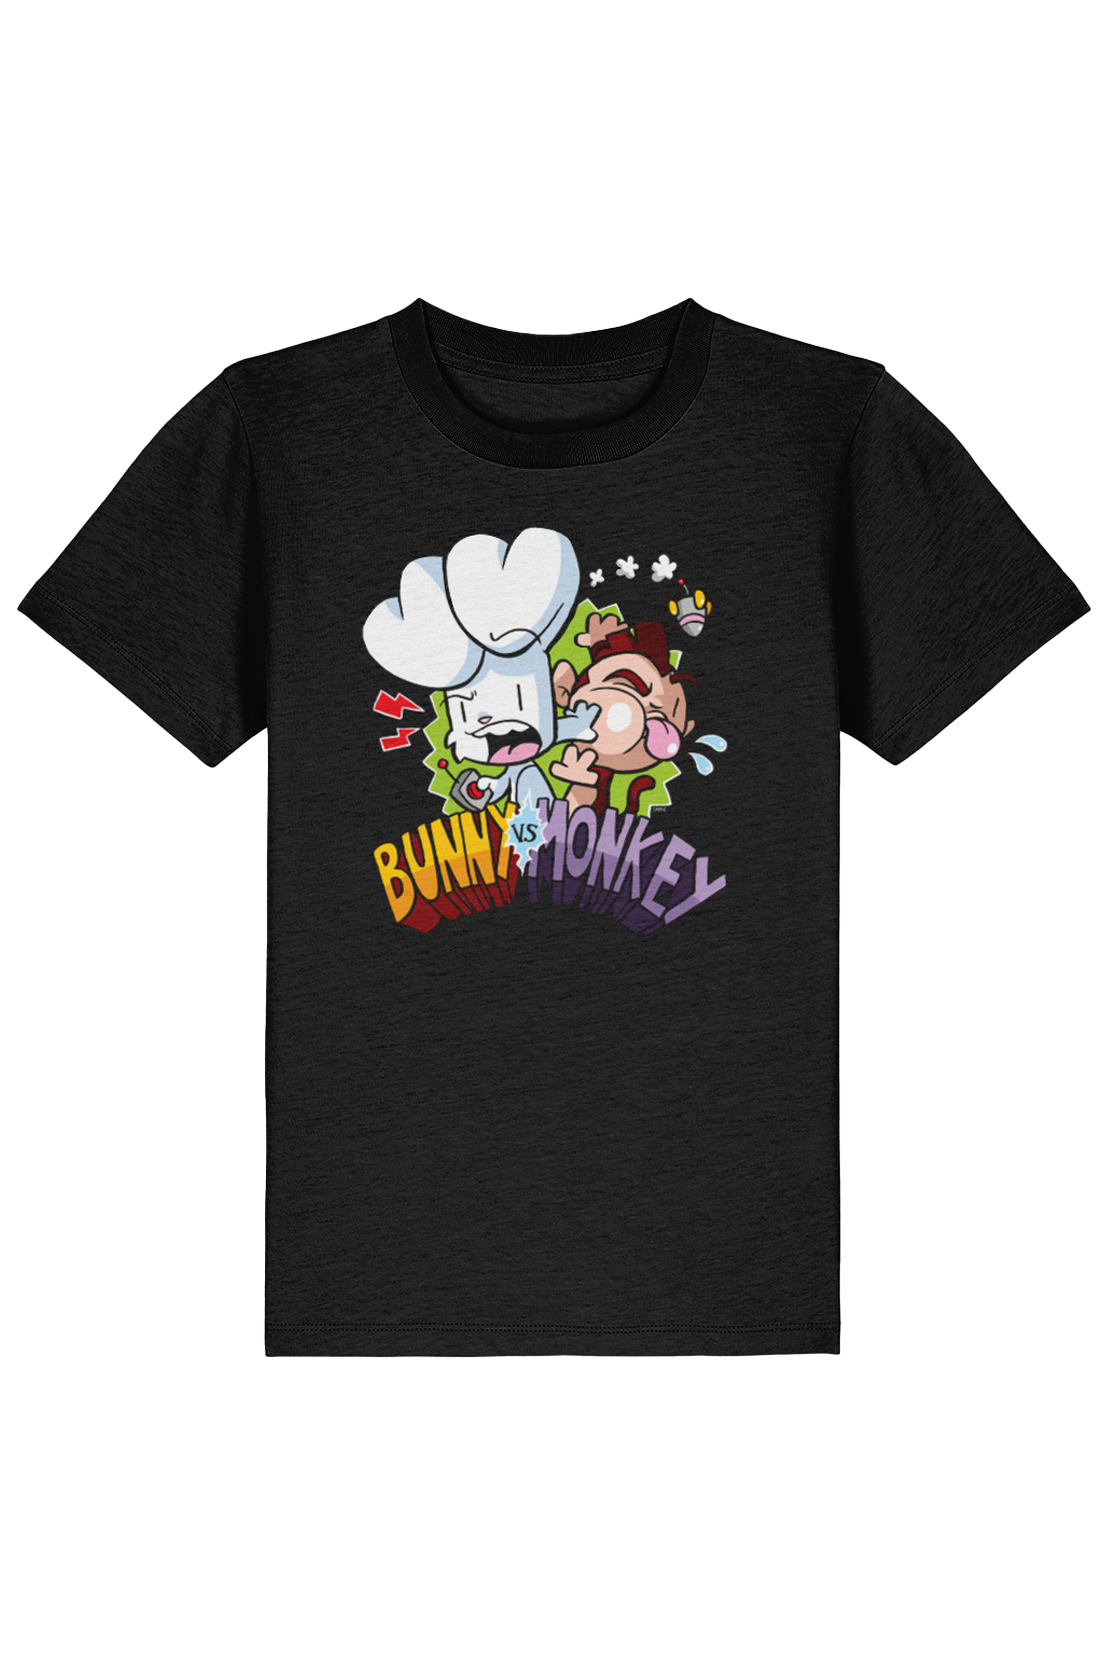 Bunny vs Monkey kids t-shirt